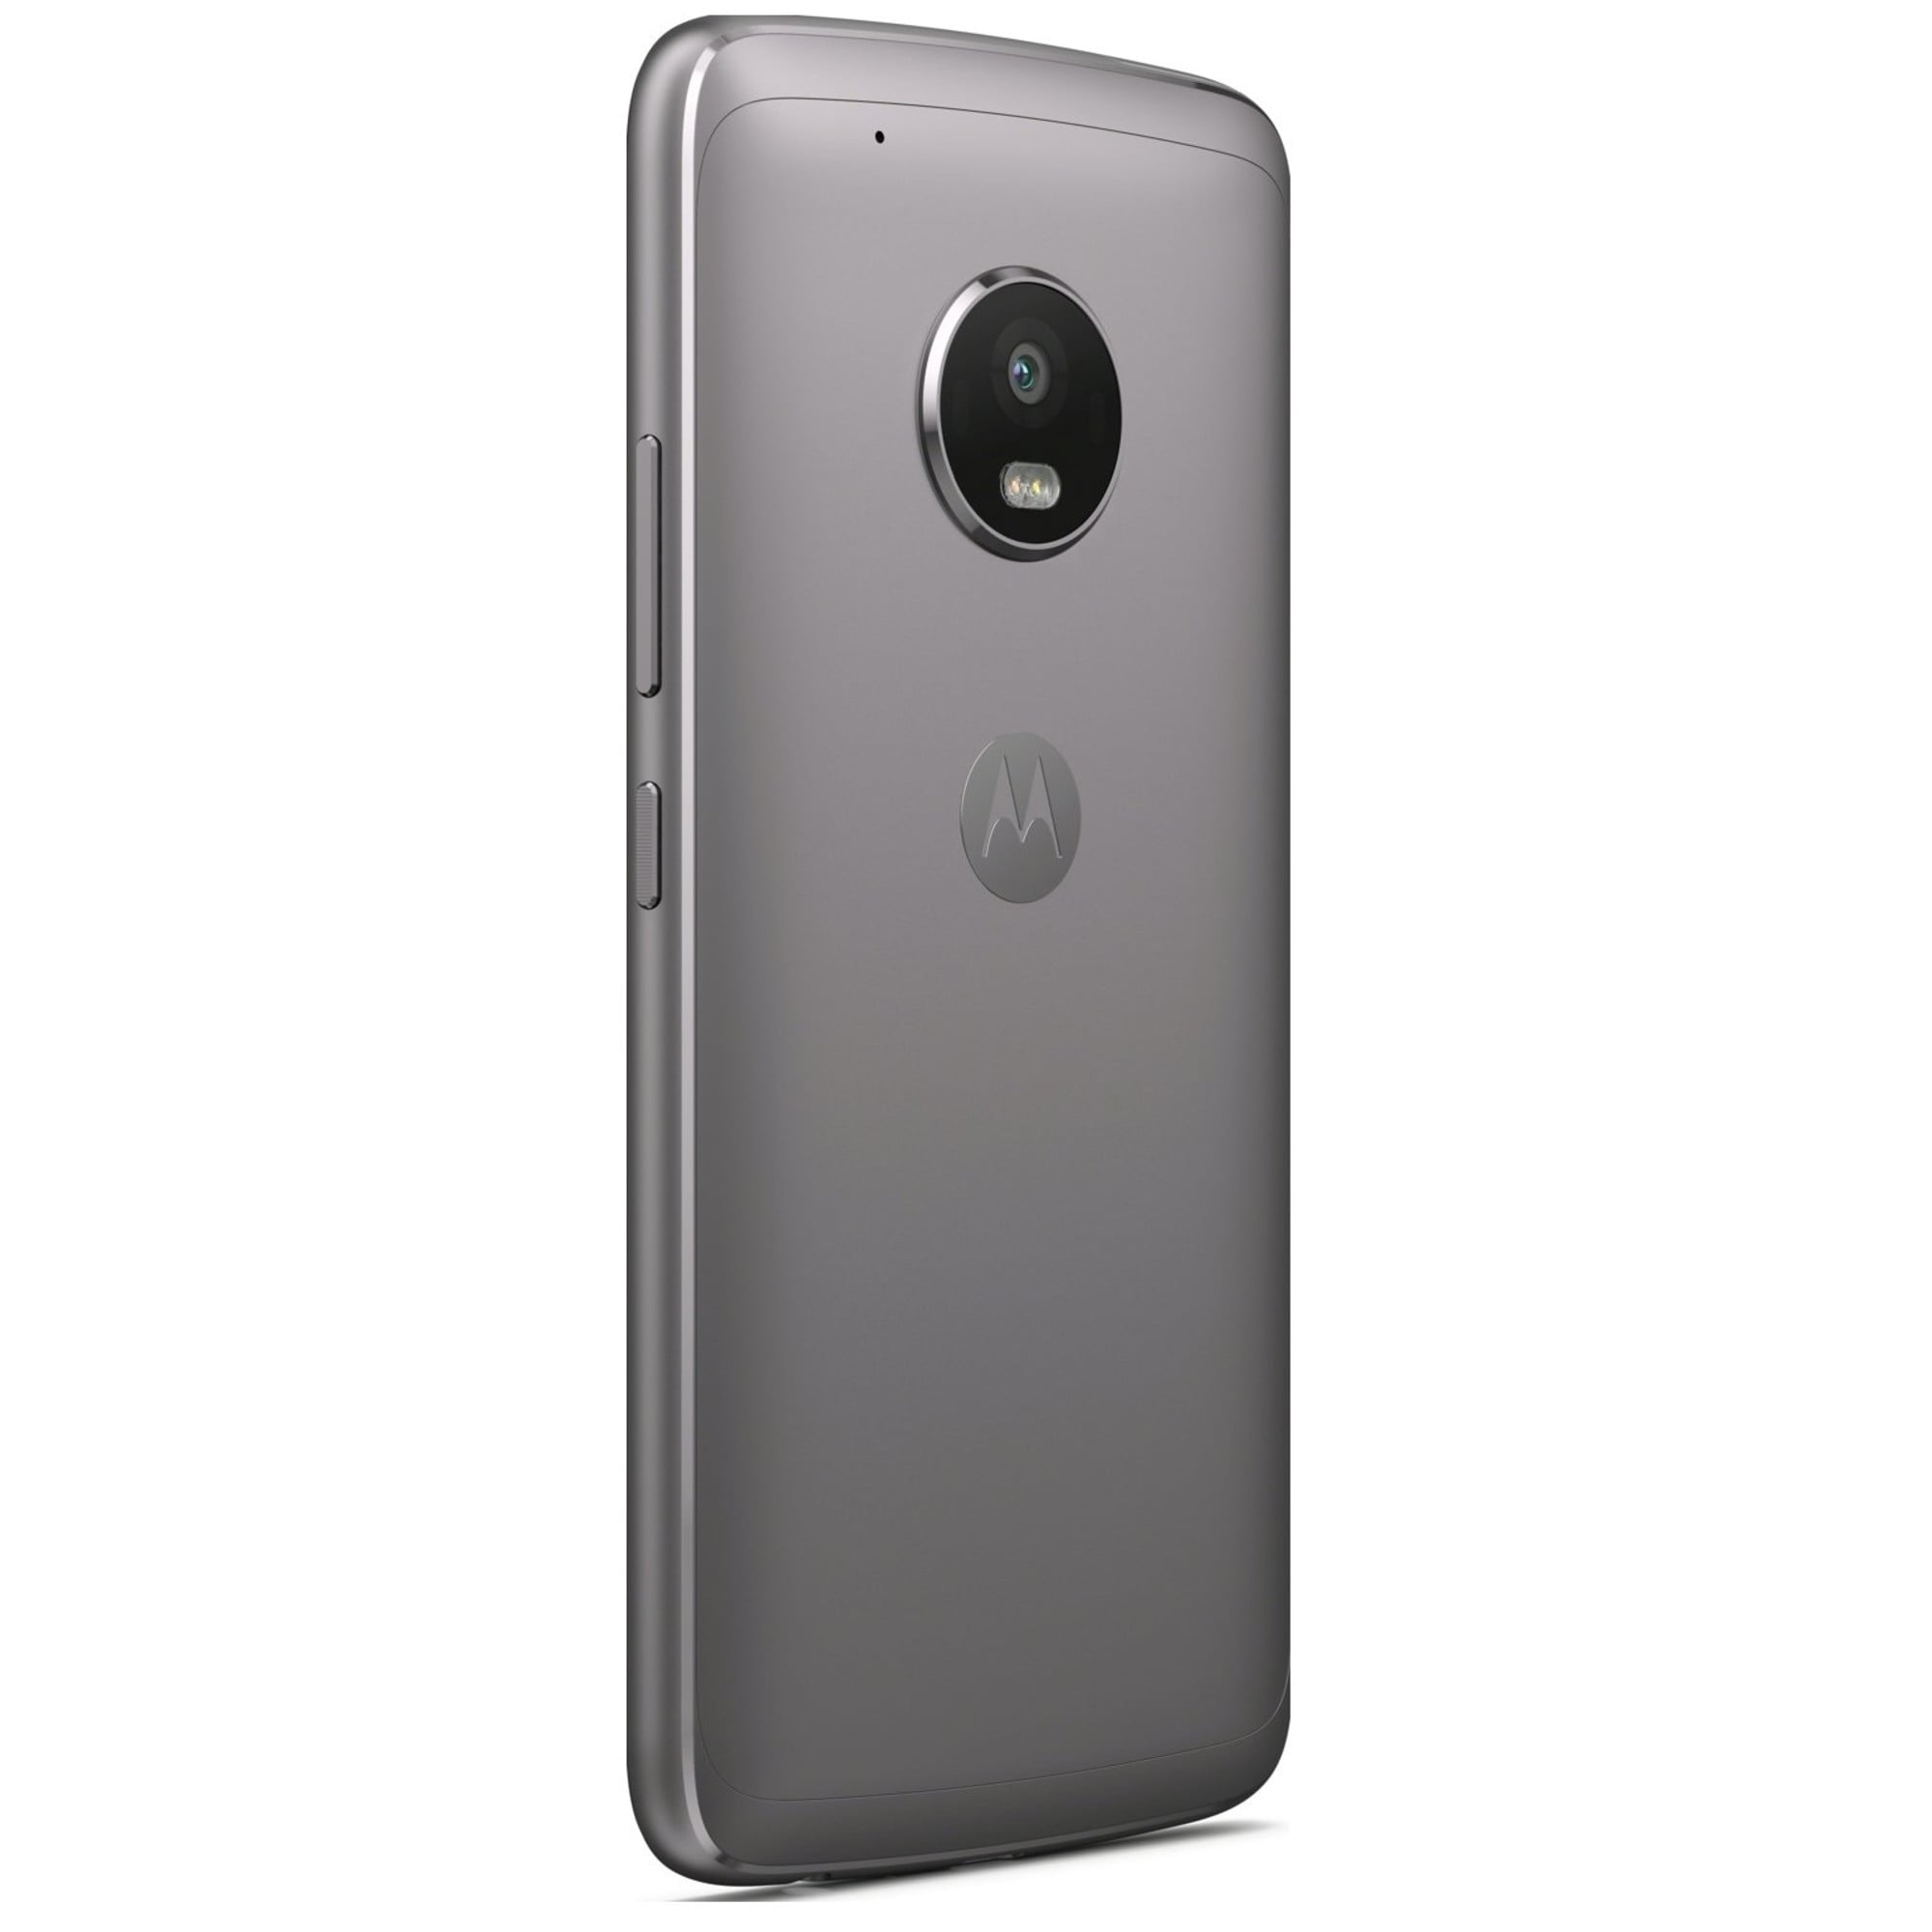 Motorola Moto G5 Plus XT1680 32GB Unlocked GSM Phone w/ 12MP Camera - Lunar  Gray (Used) 